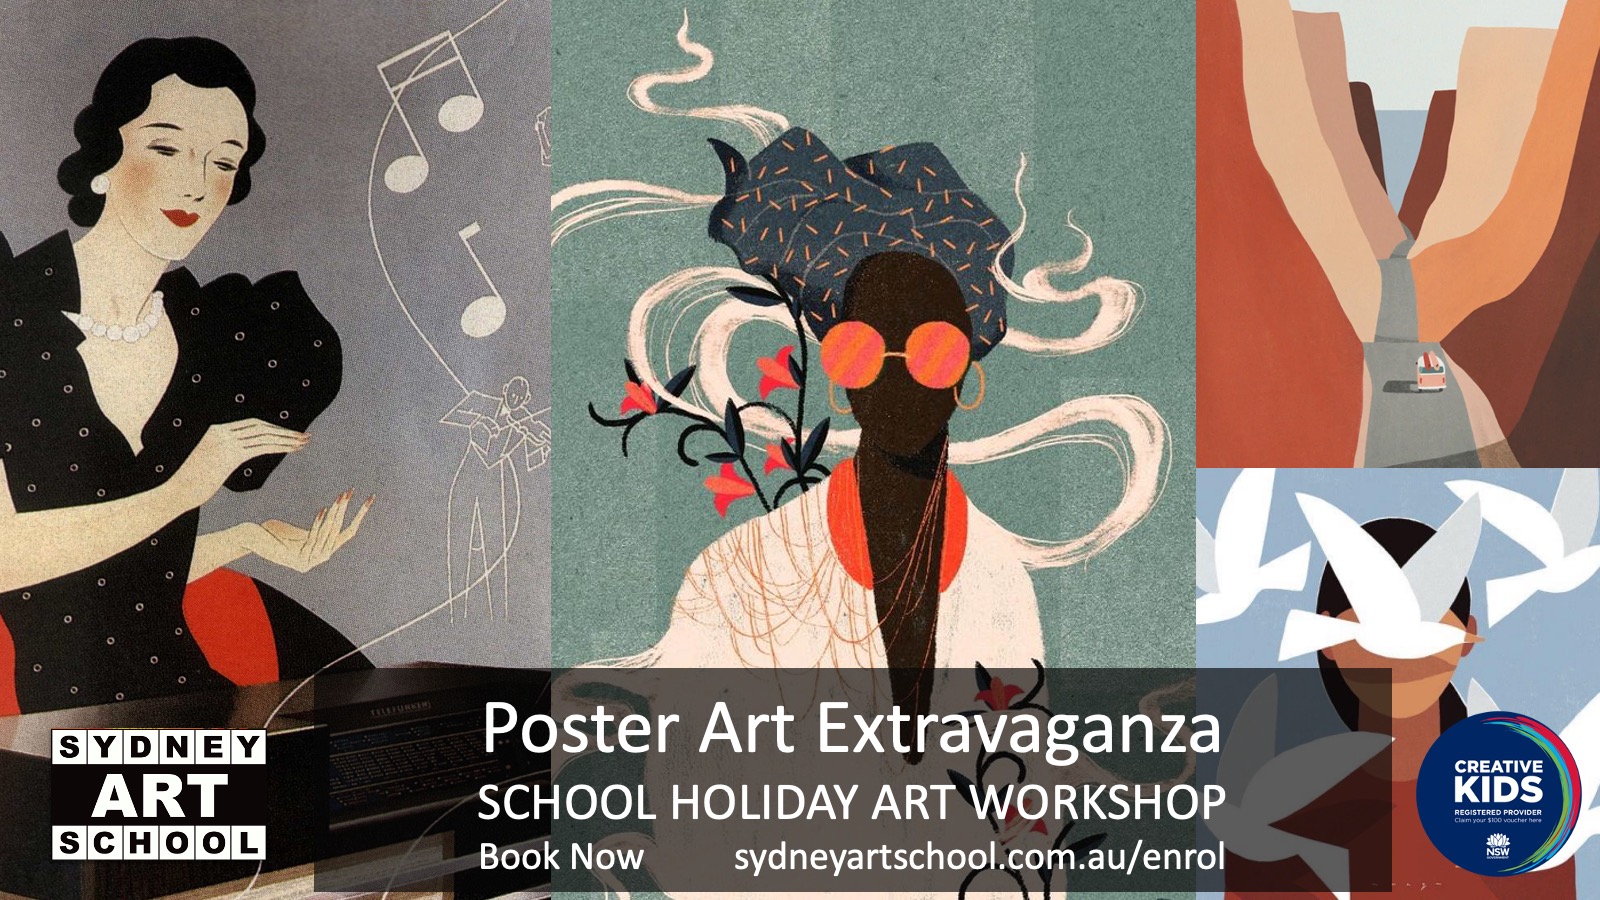 Sydney Art School Holiday Art Workshop Poster Art